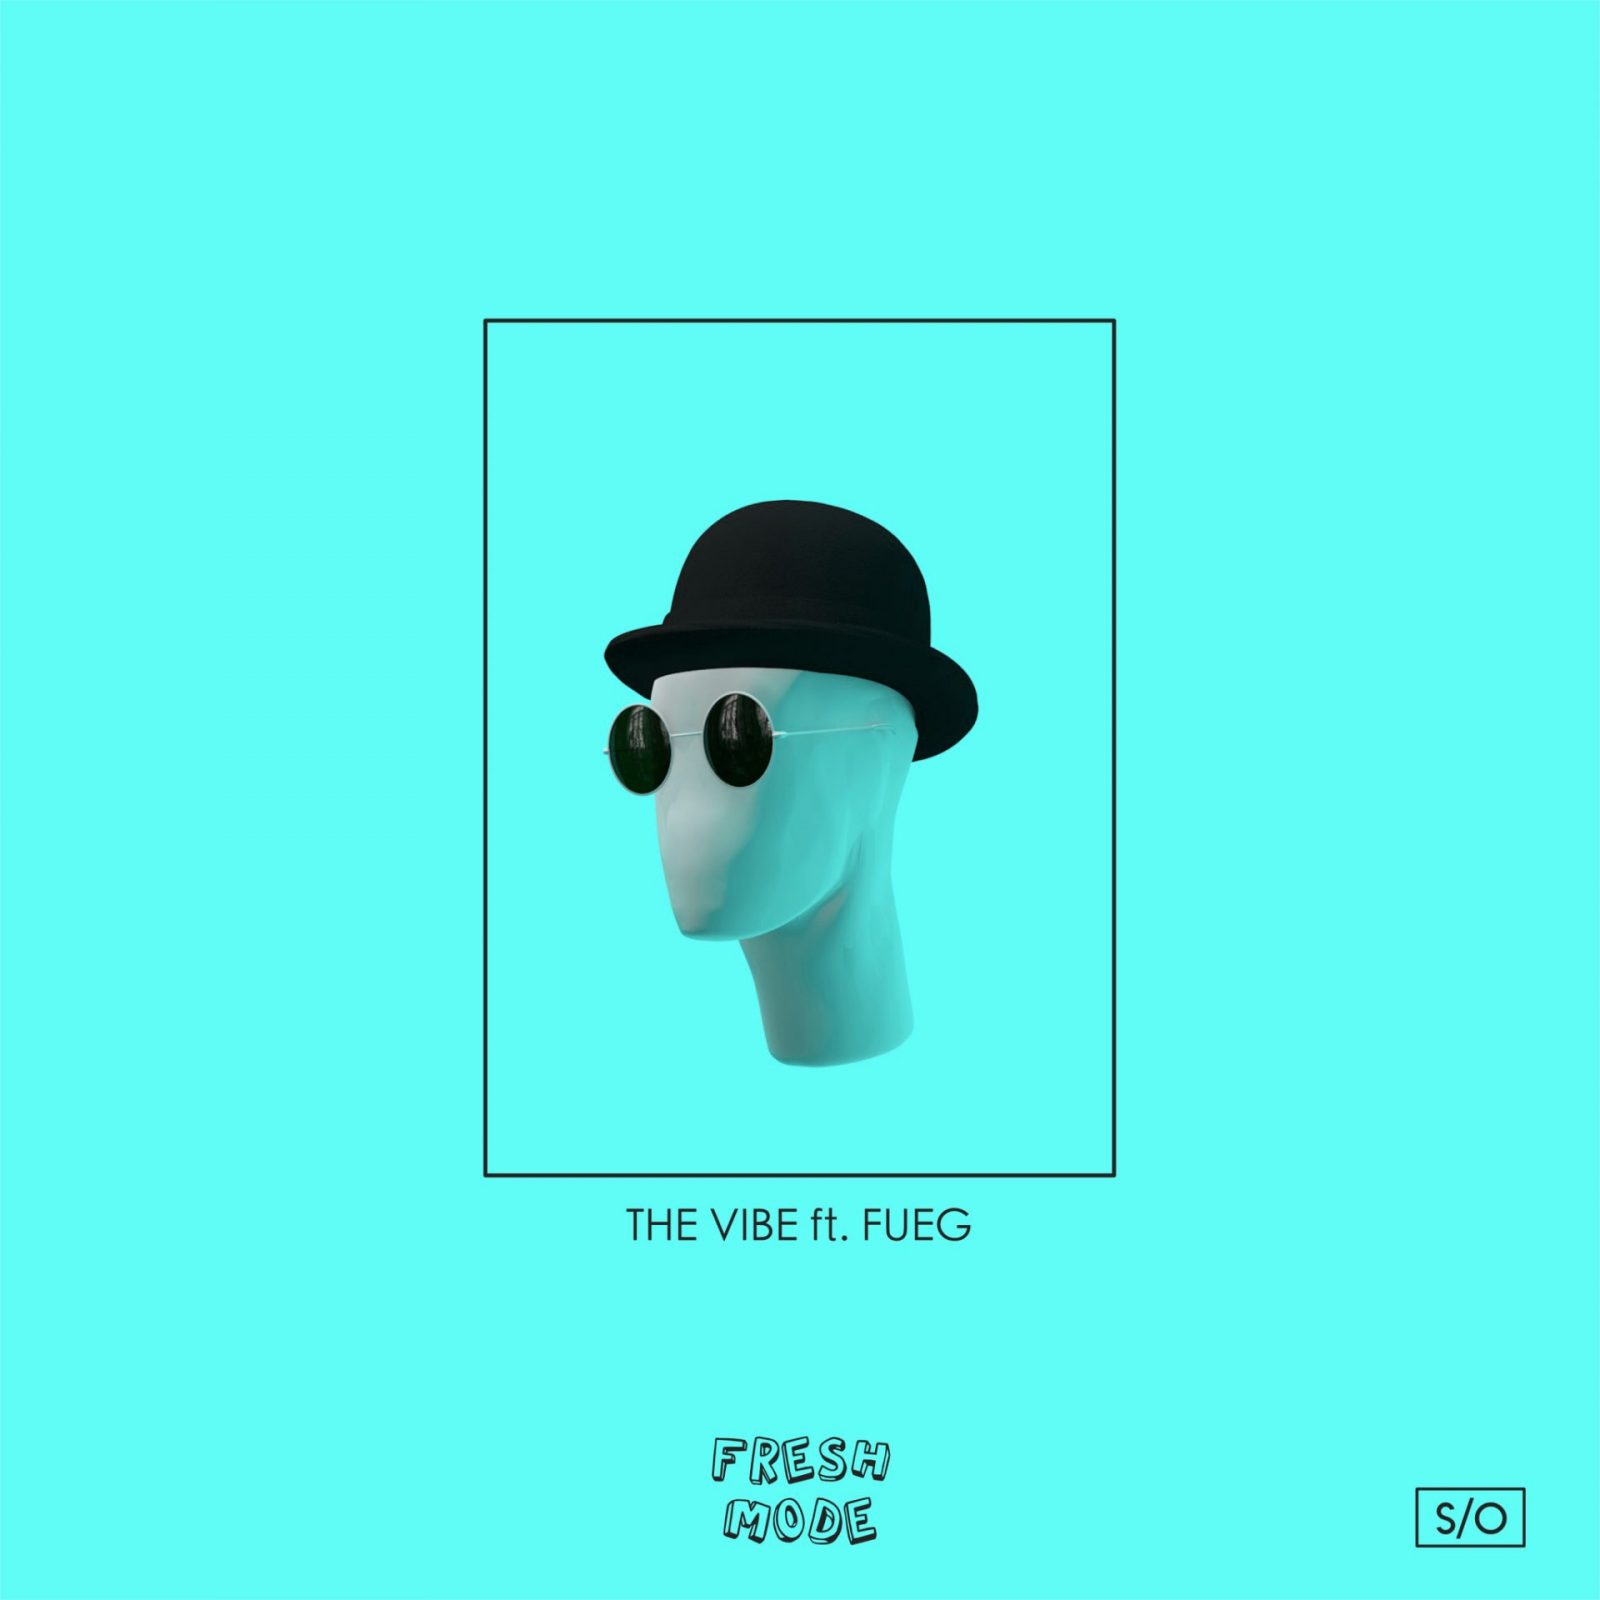 FRESH MODE ft. FUEG - THE VIBE